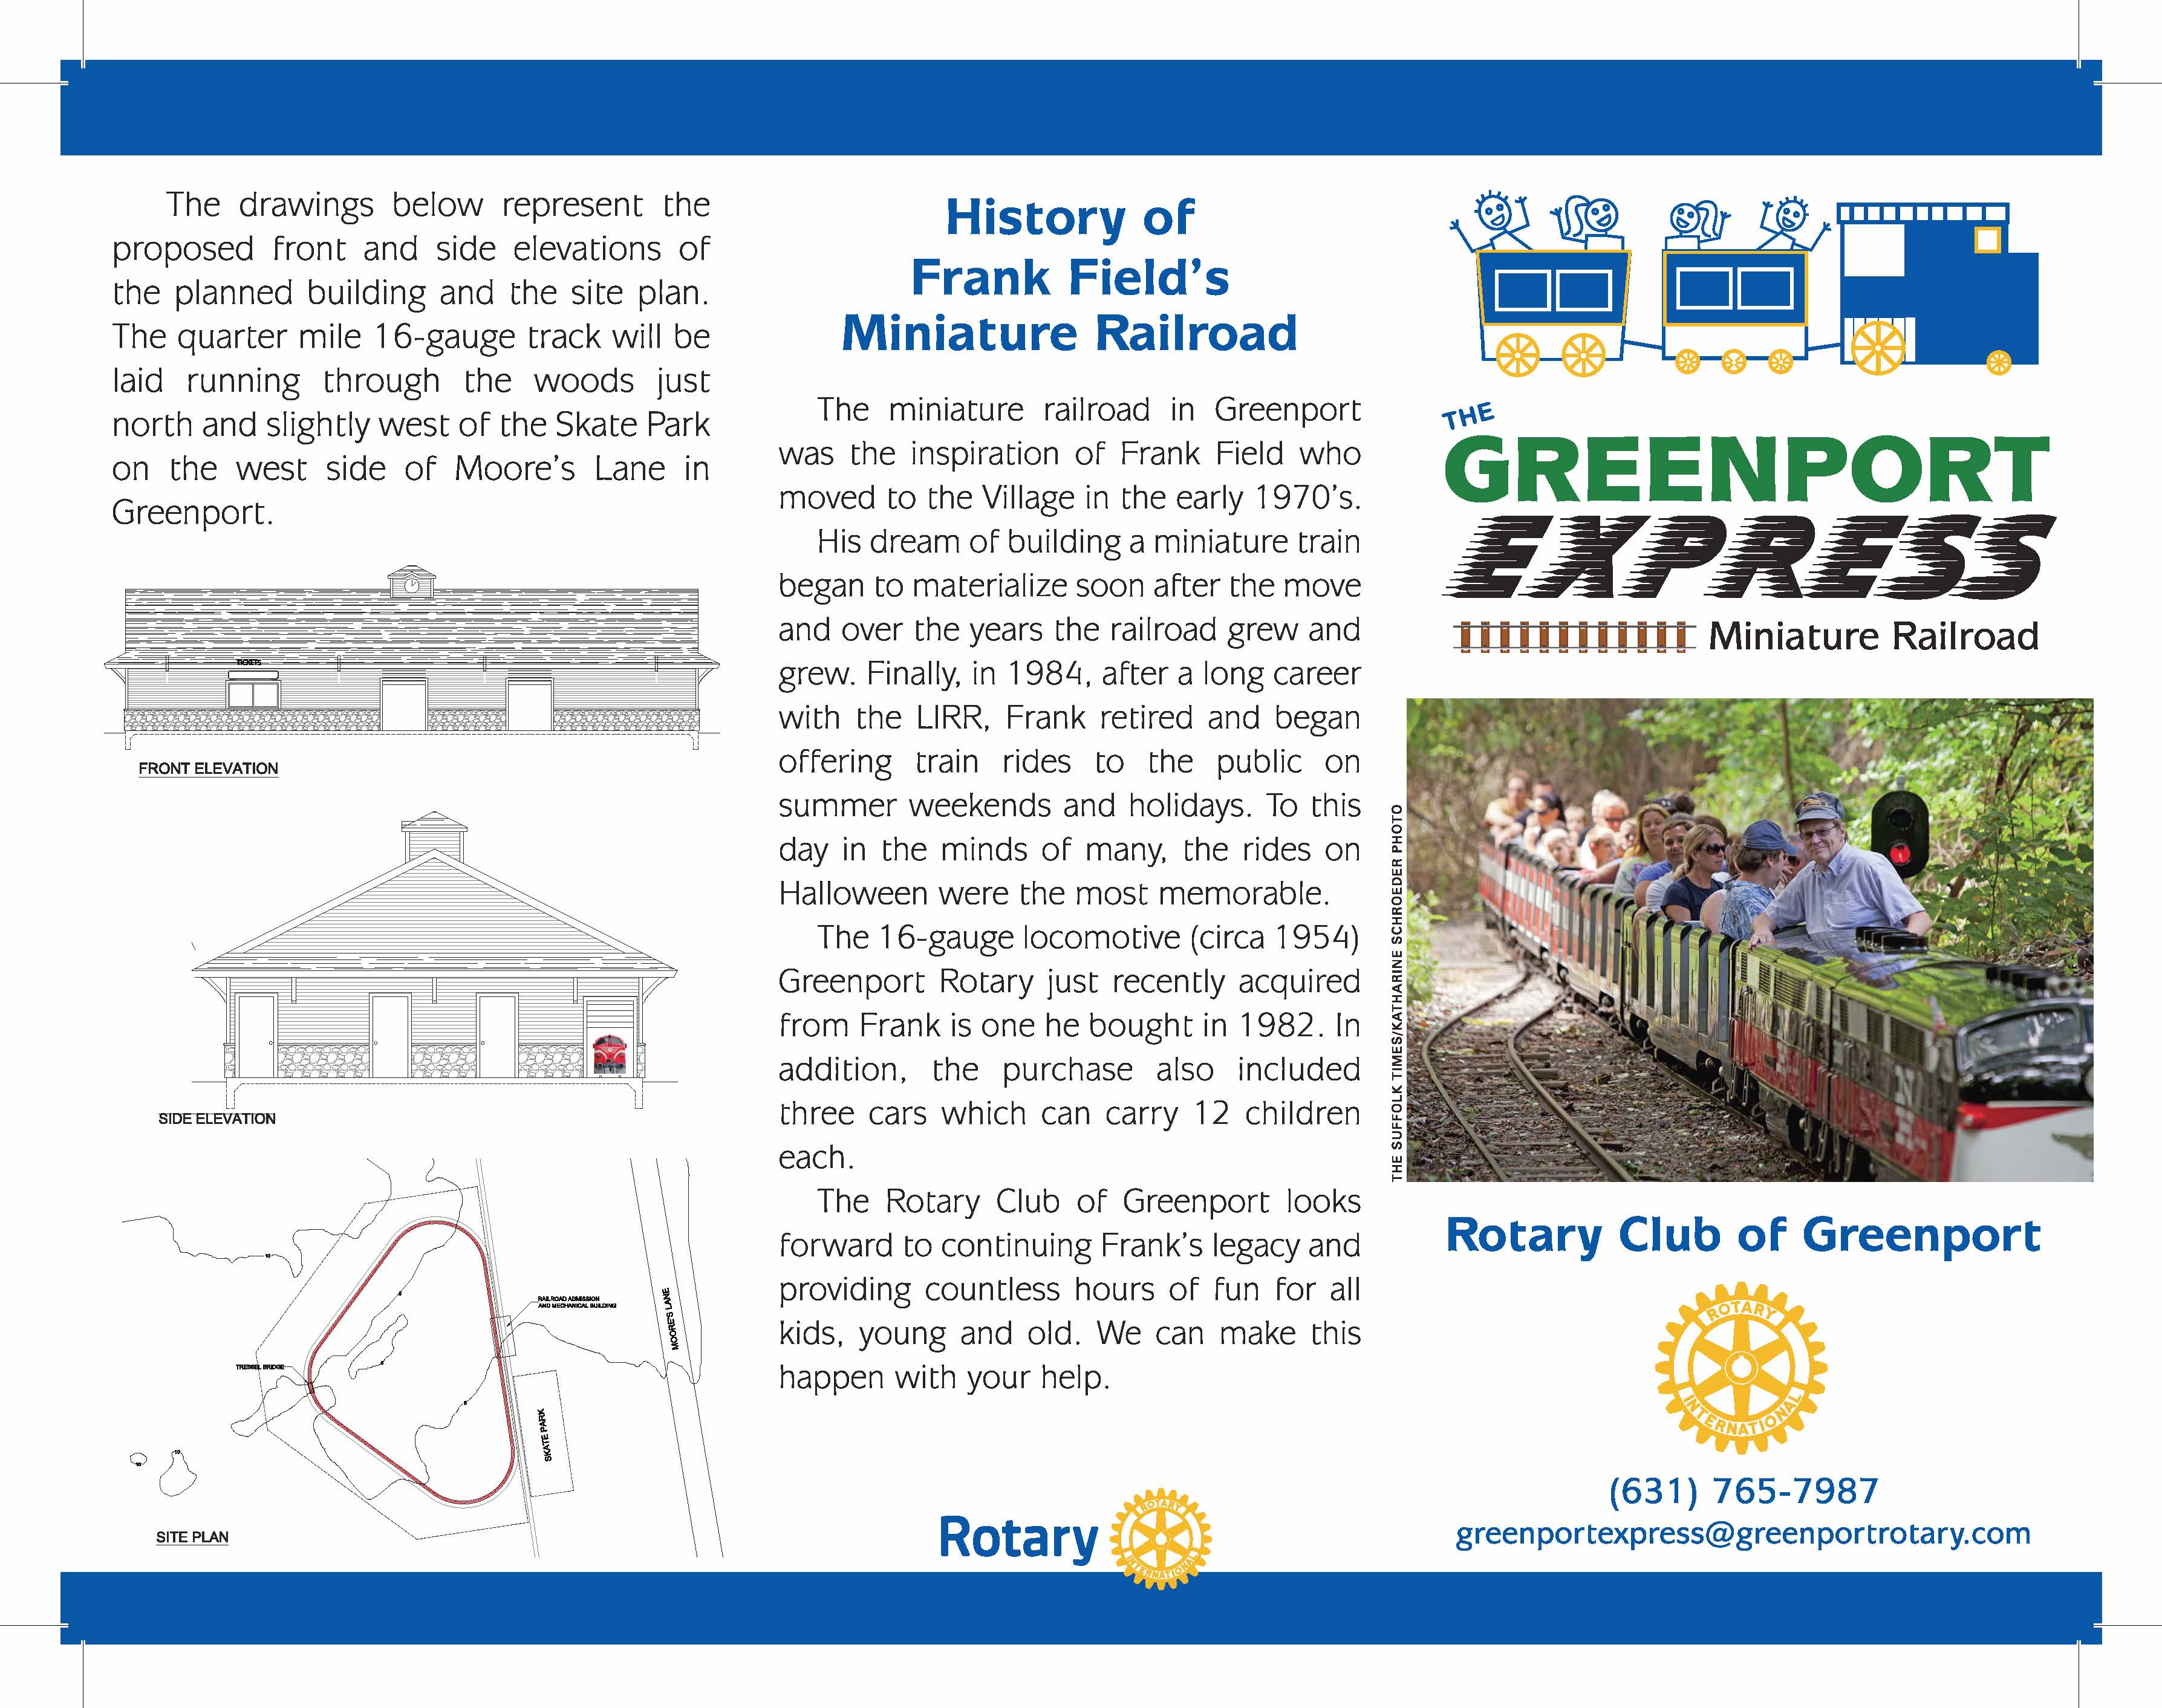 Greenport Express Sponsored by Greenport Rotary Club